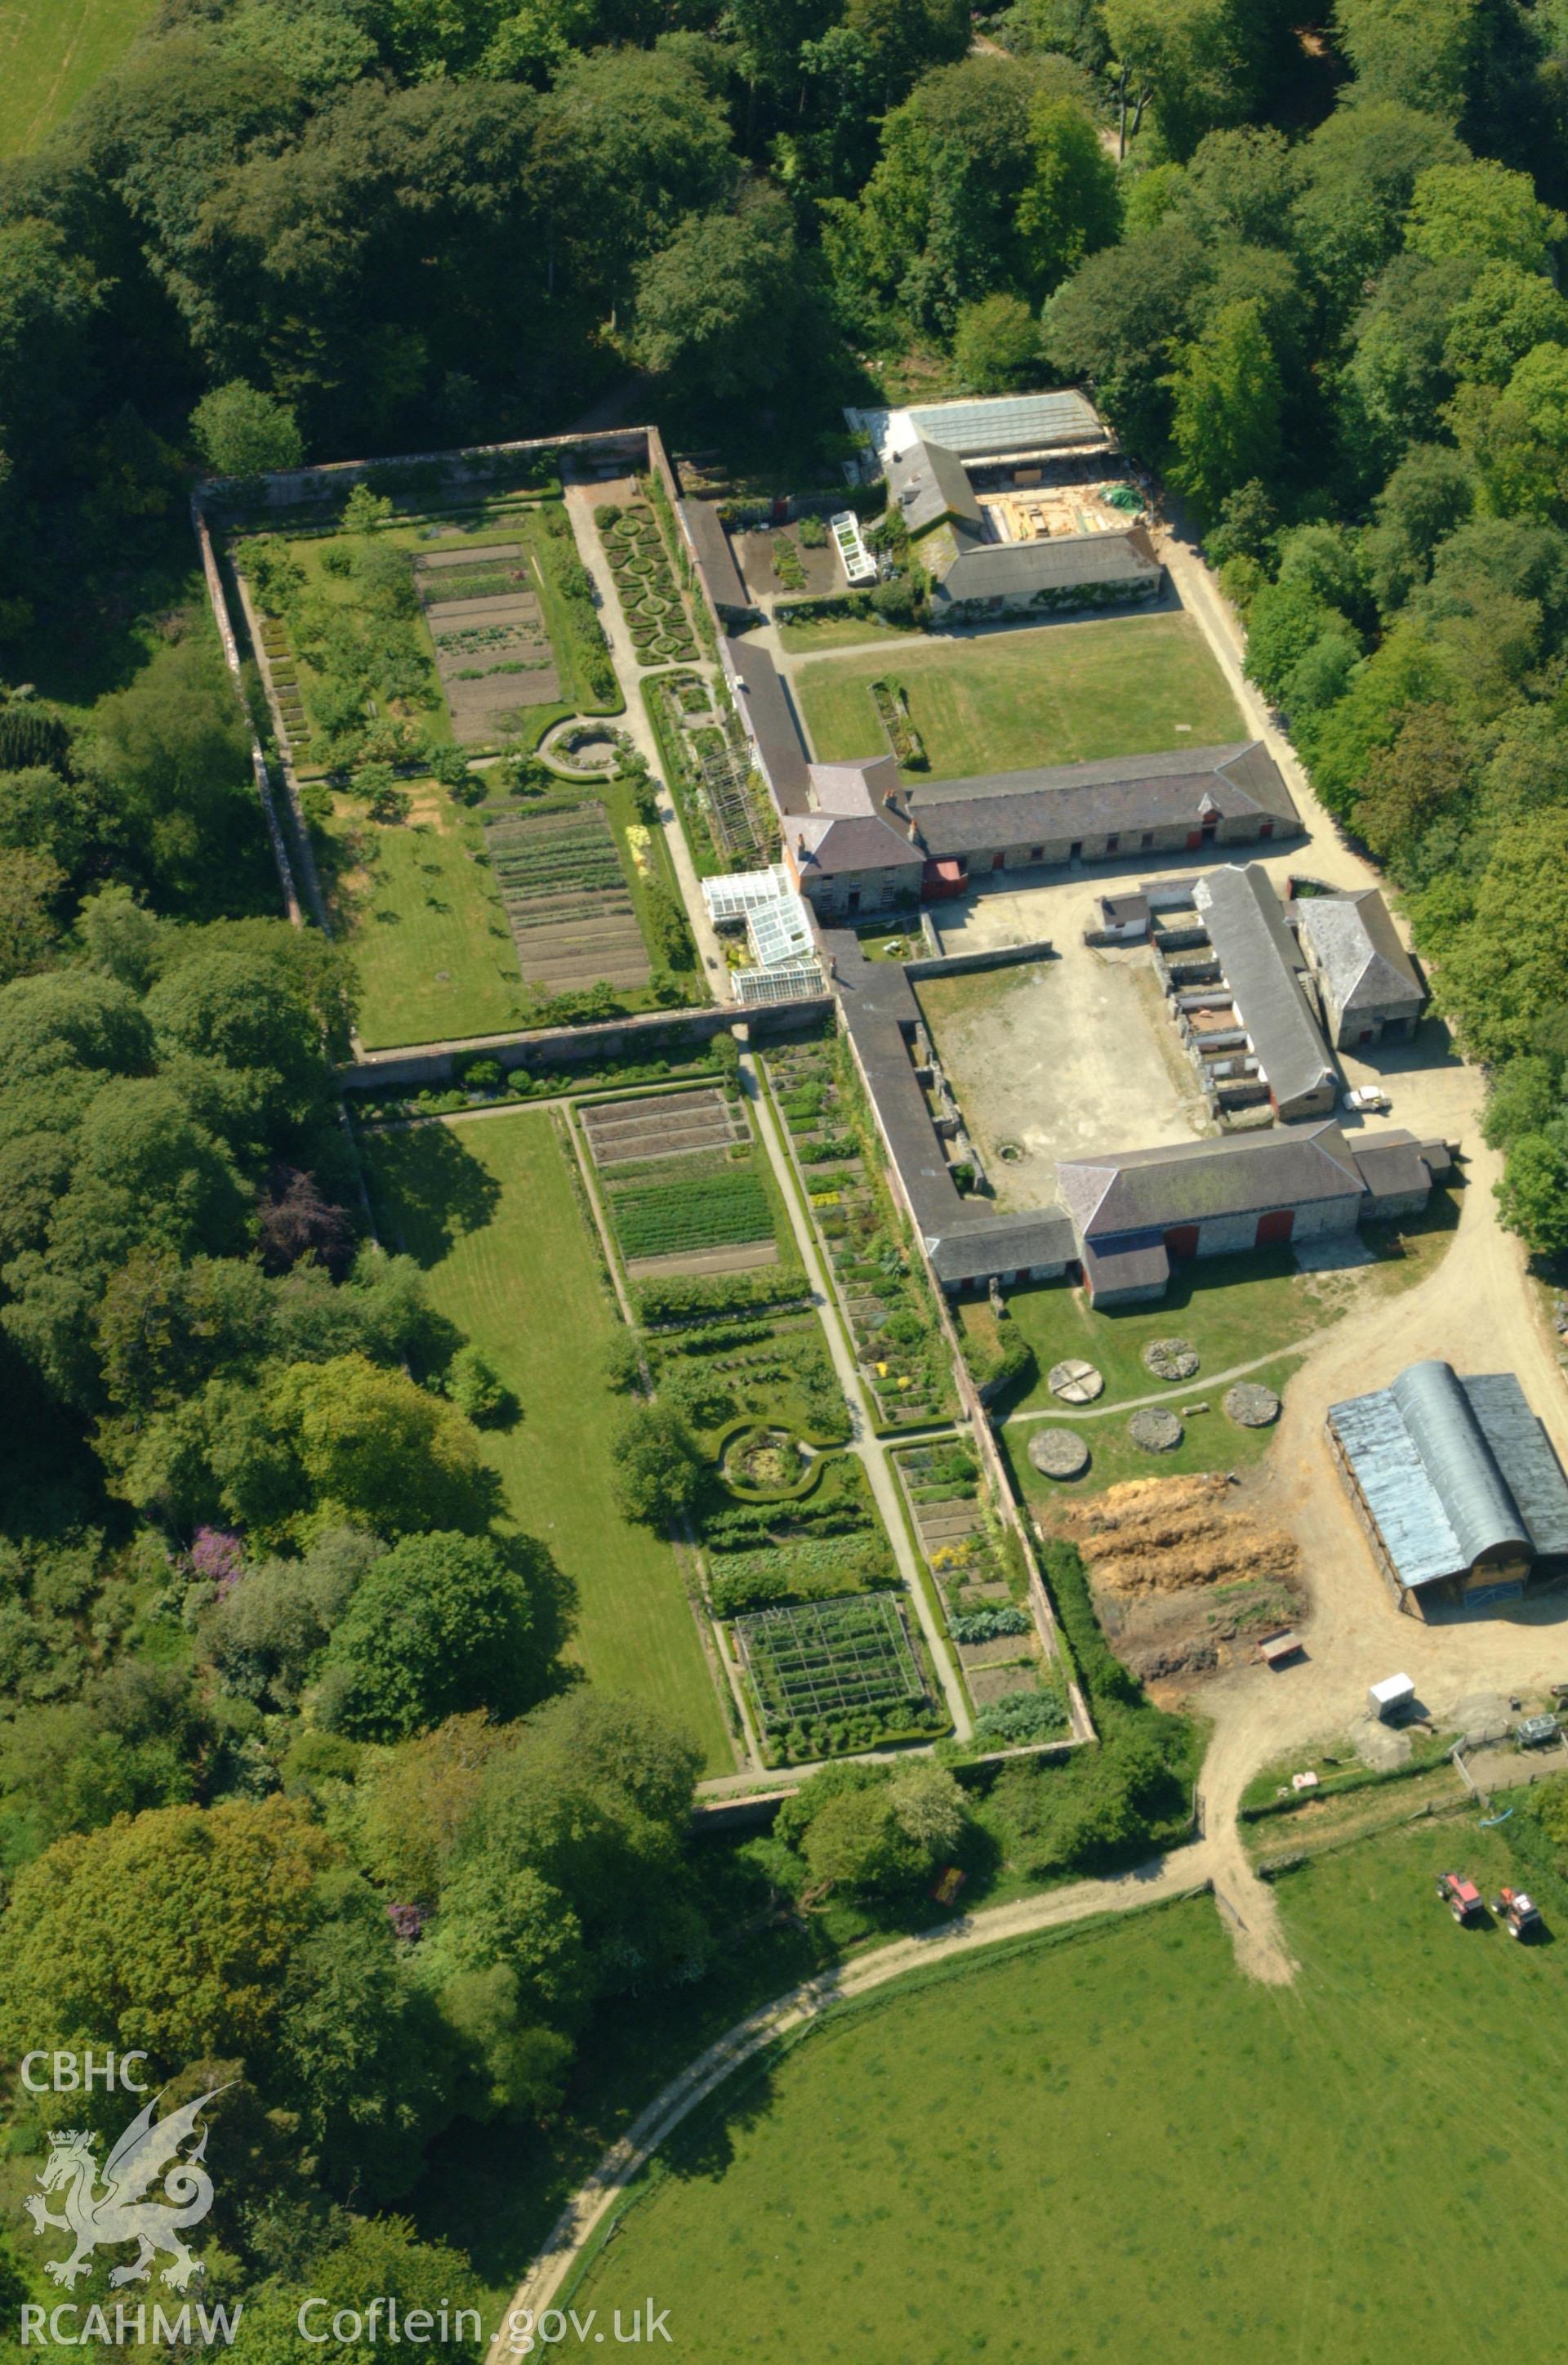 RCAHMW colour oblique aerial photograph of Llanaeron Garden taken on 24/05/2004 by Toby Driver